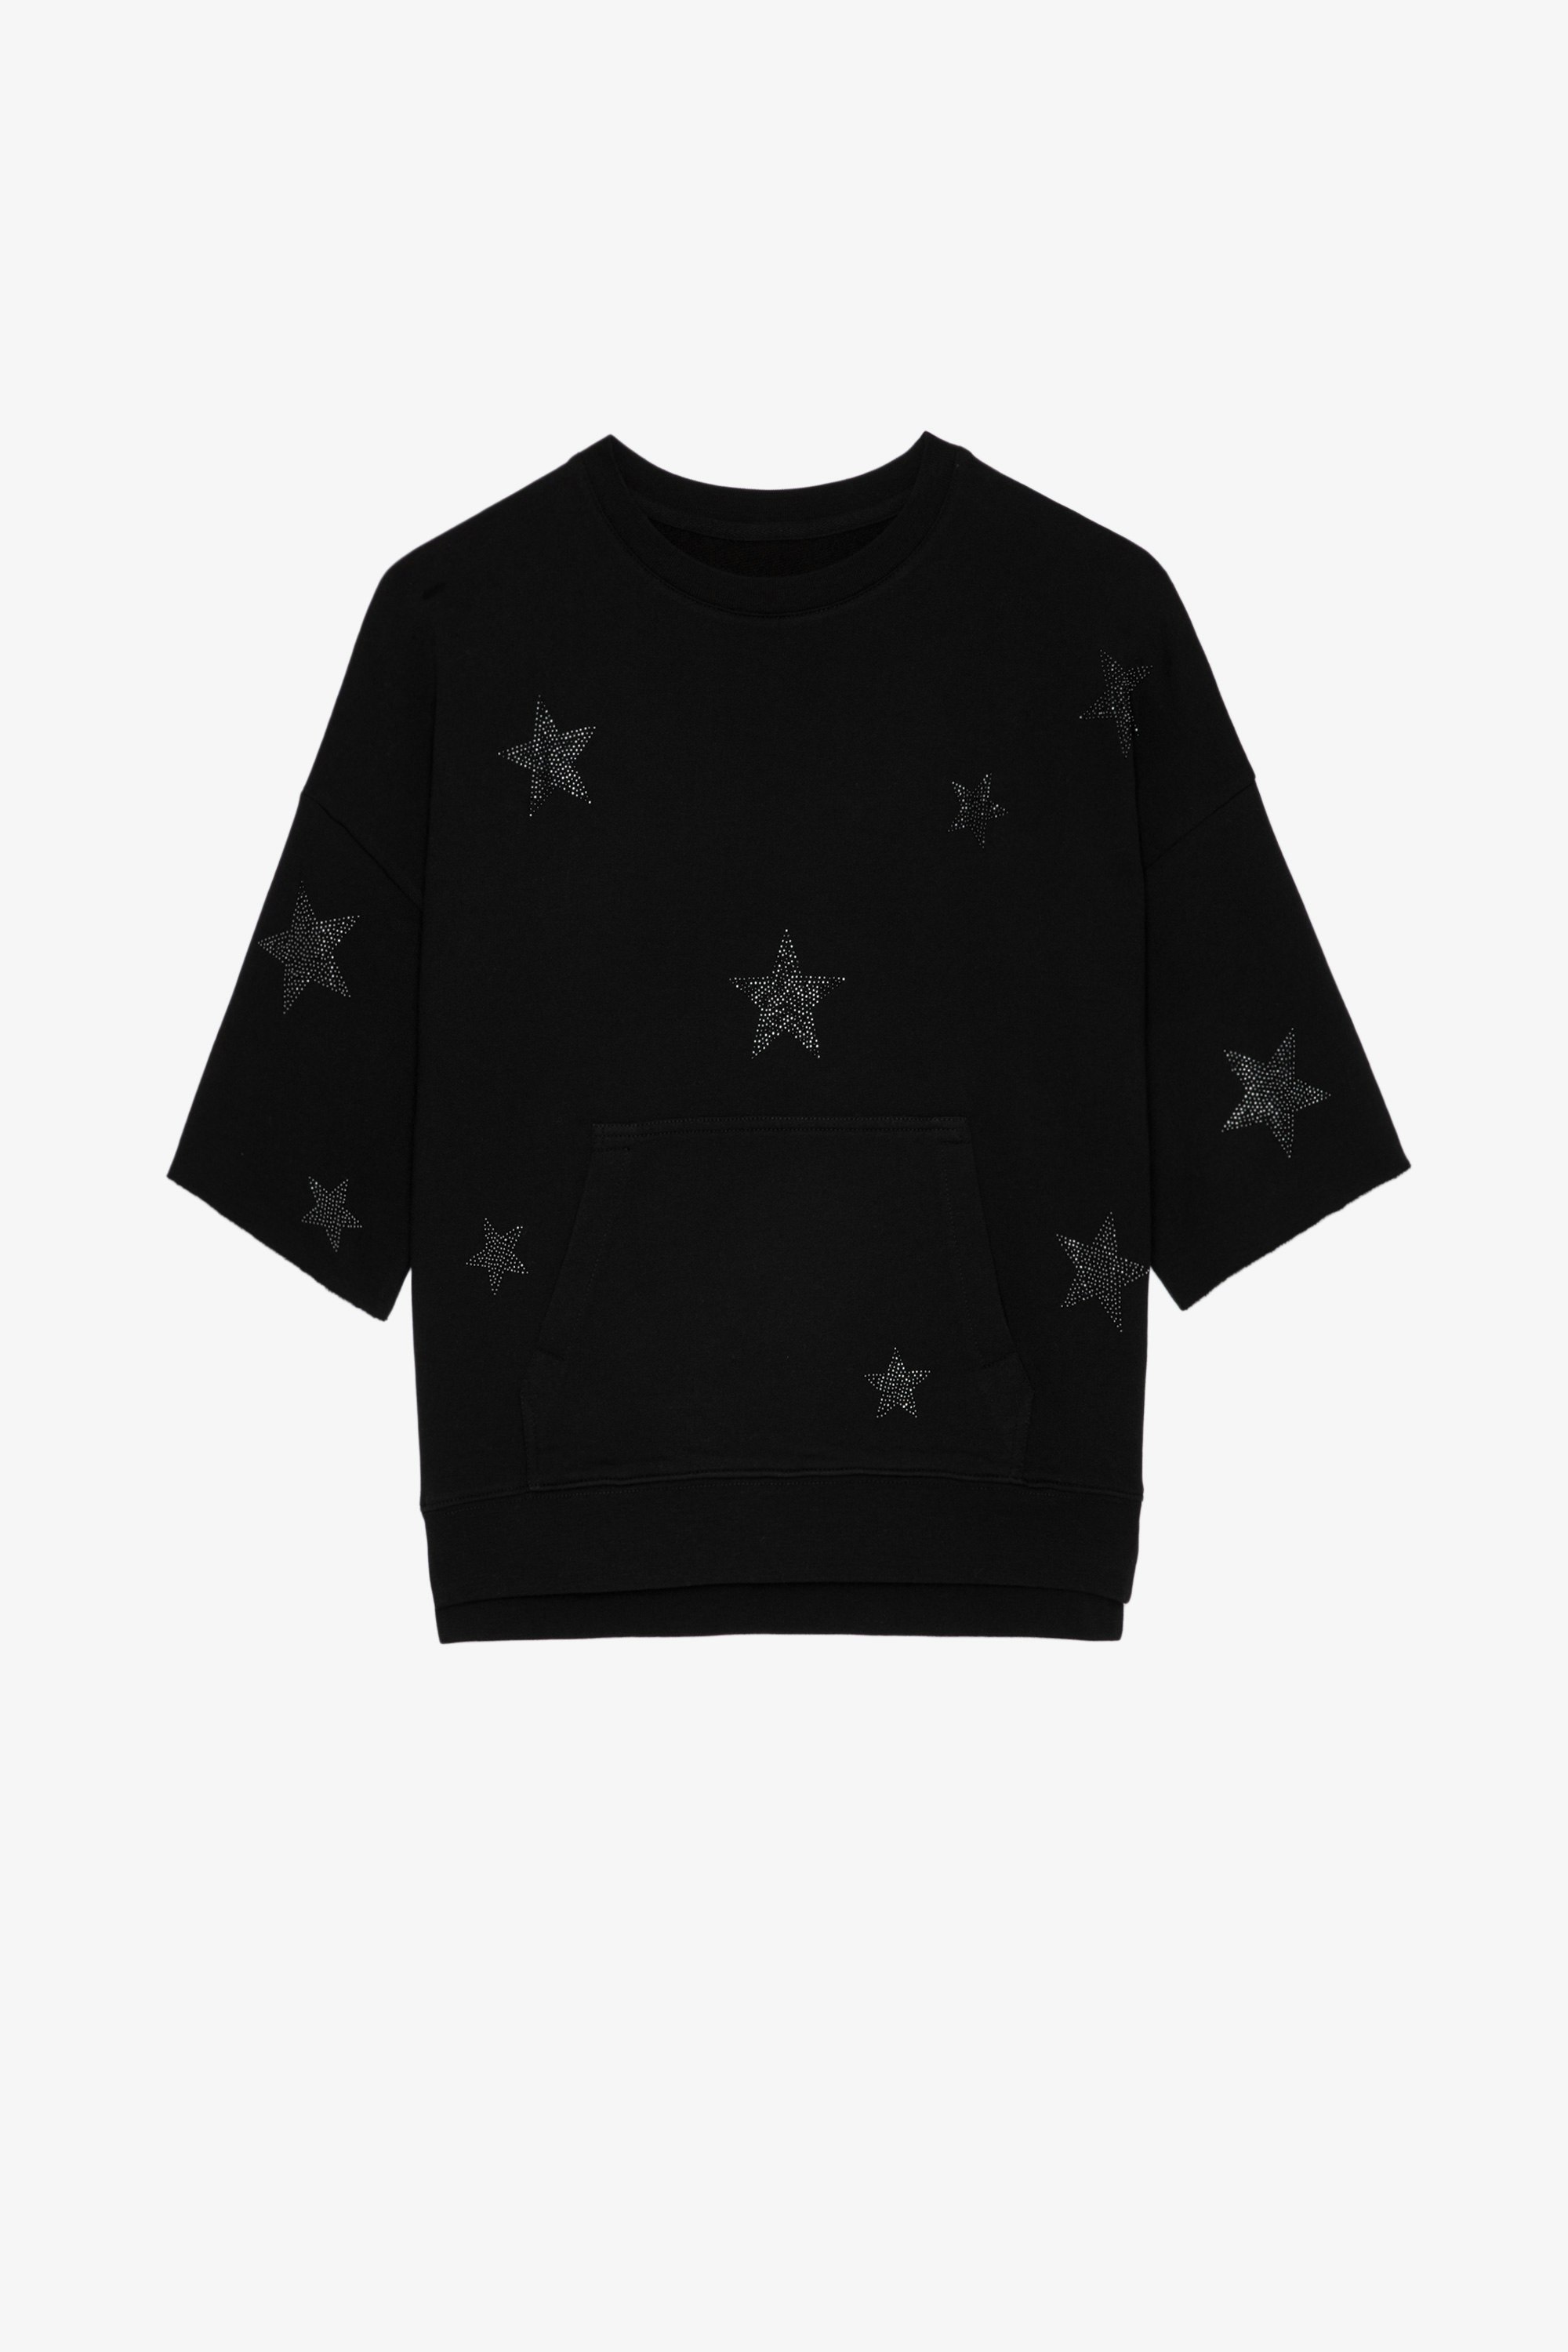 Georgy  Color Box Sweatshirt  Women's cotton sweatshirt with crystal-embellished stars